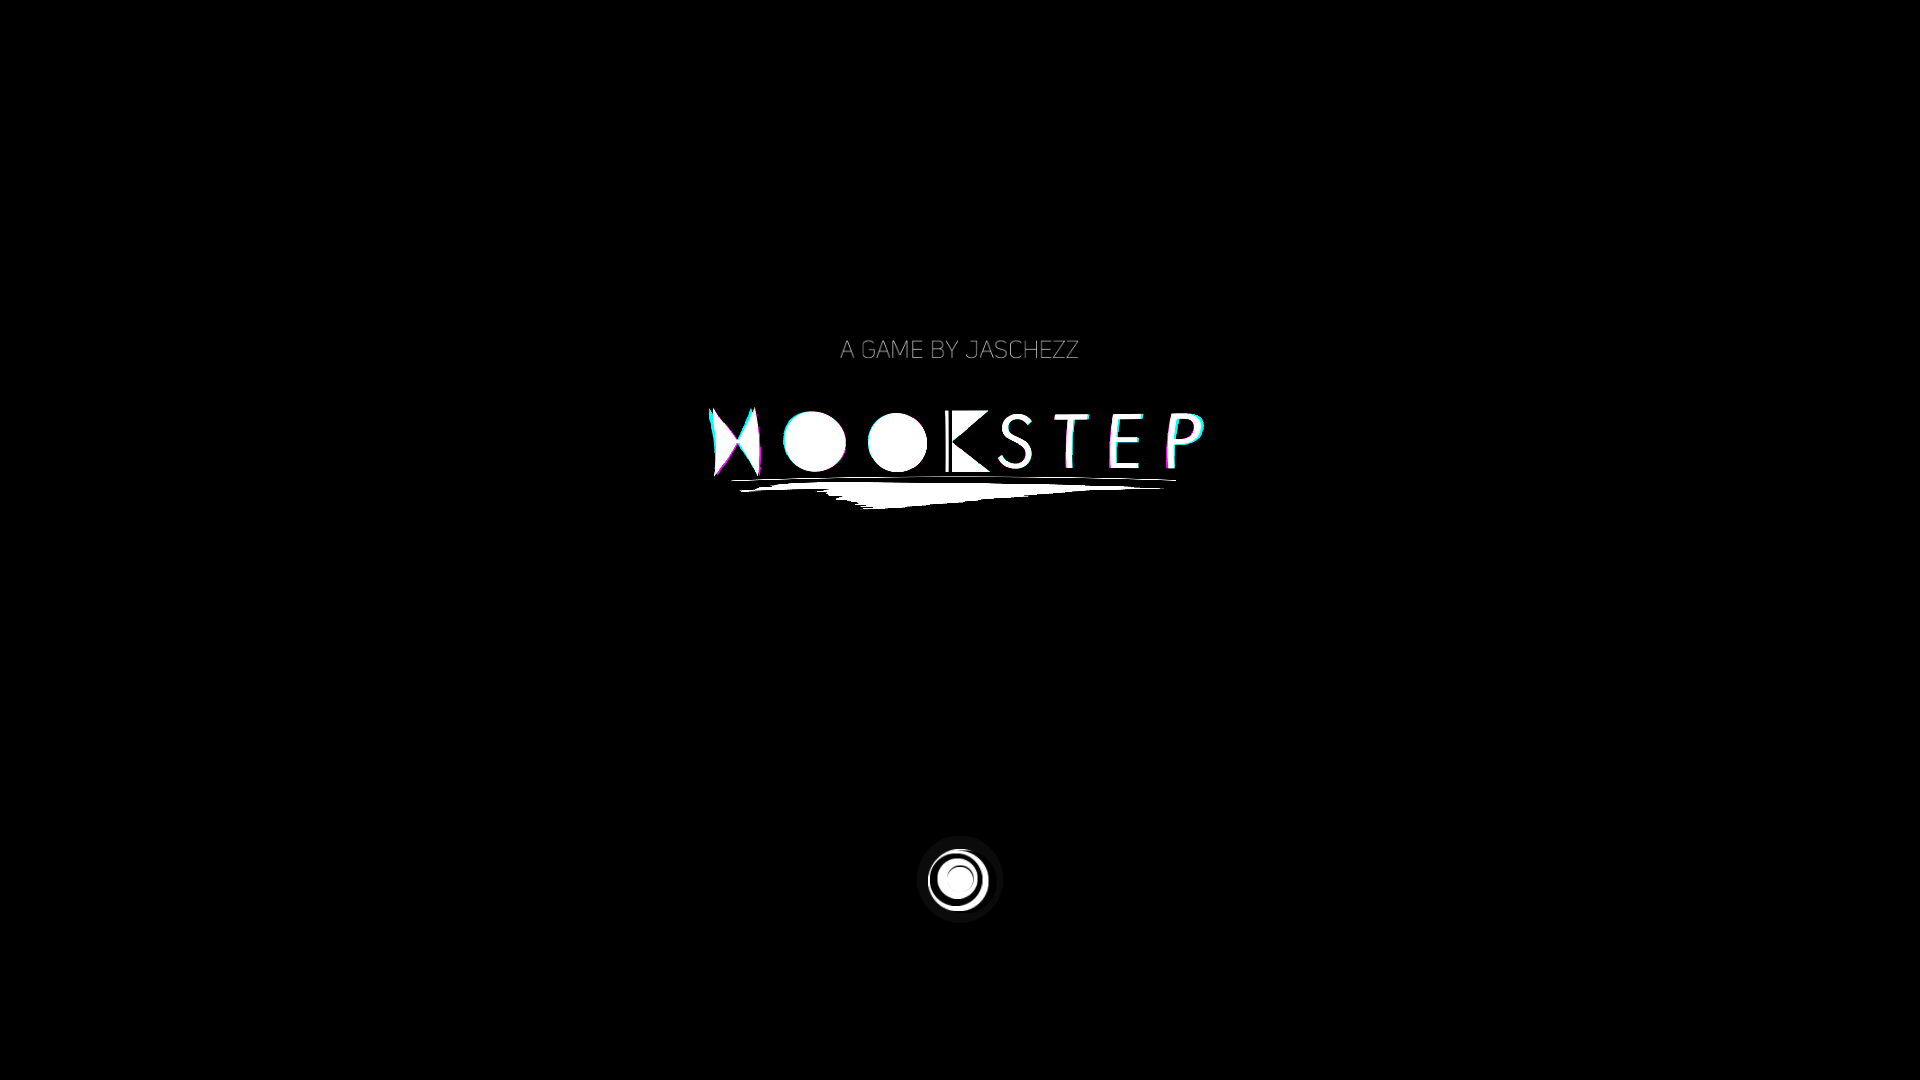 Hookstep (endless prototype version)